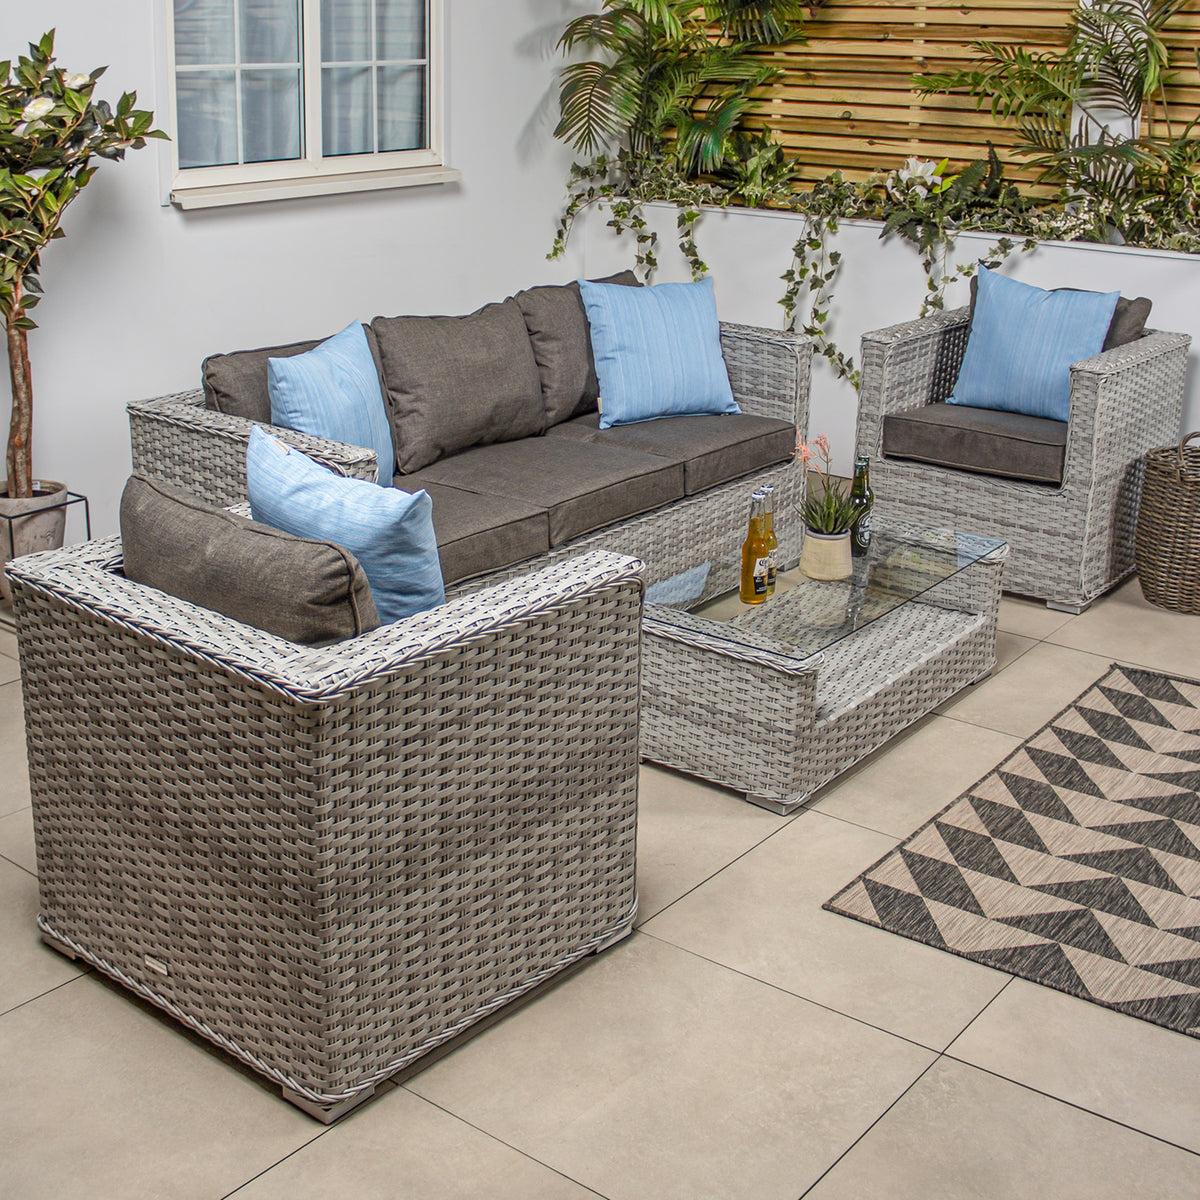 Bracken Outdoors Madrid Light Grey 3 Seat Sofa Lounge Garden Furniture Set with Coffee Table